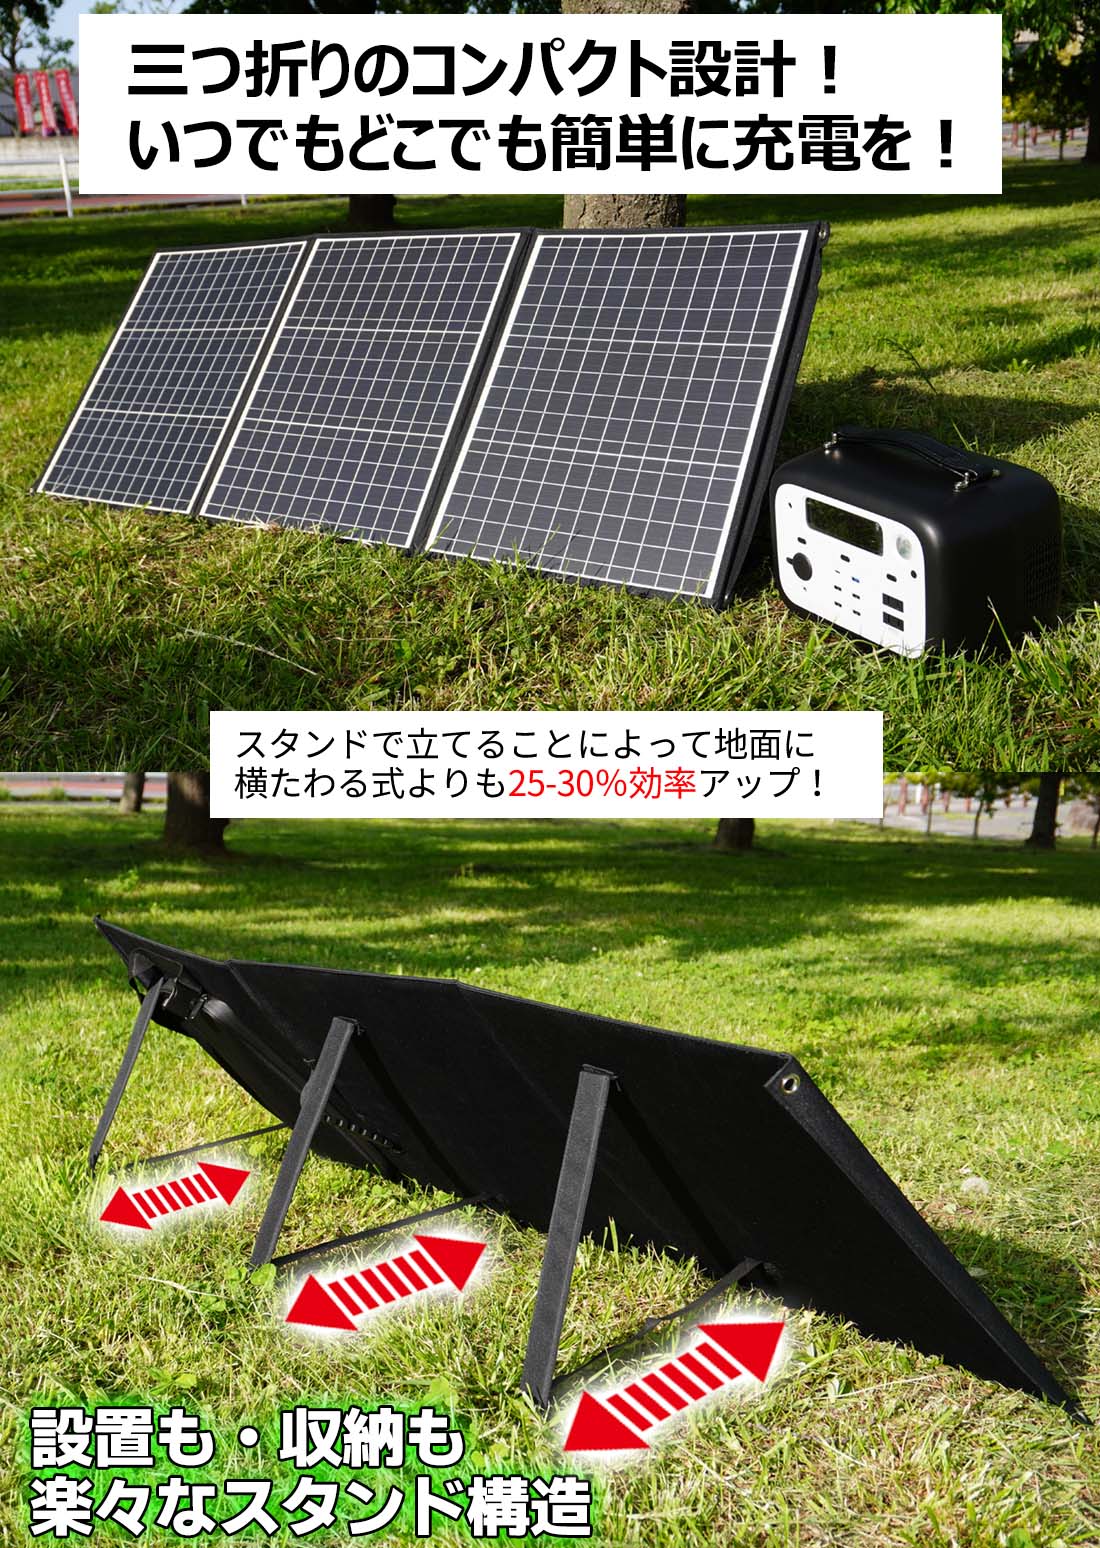 powerarq smarttap ソーラーパネル付き(120w) proenergi.com